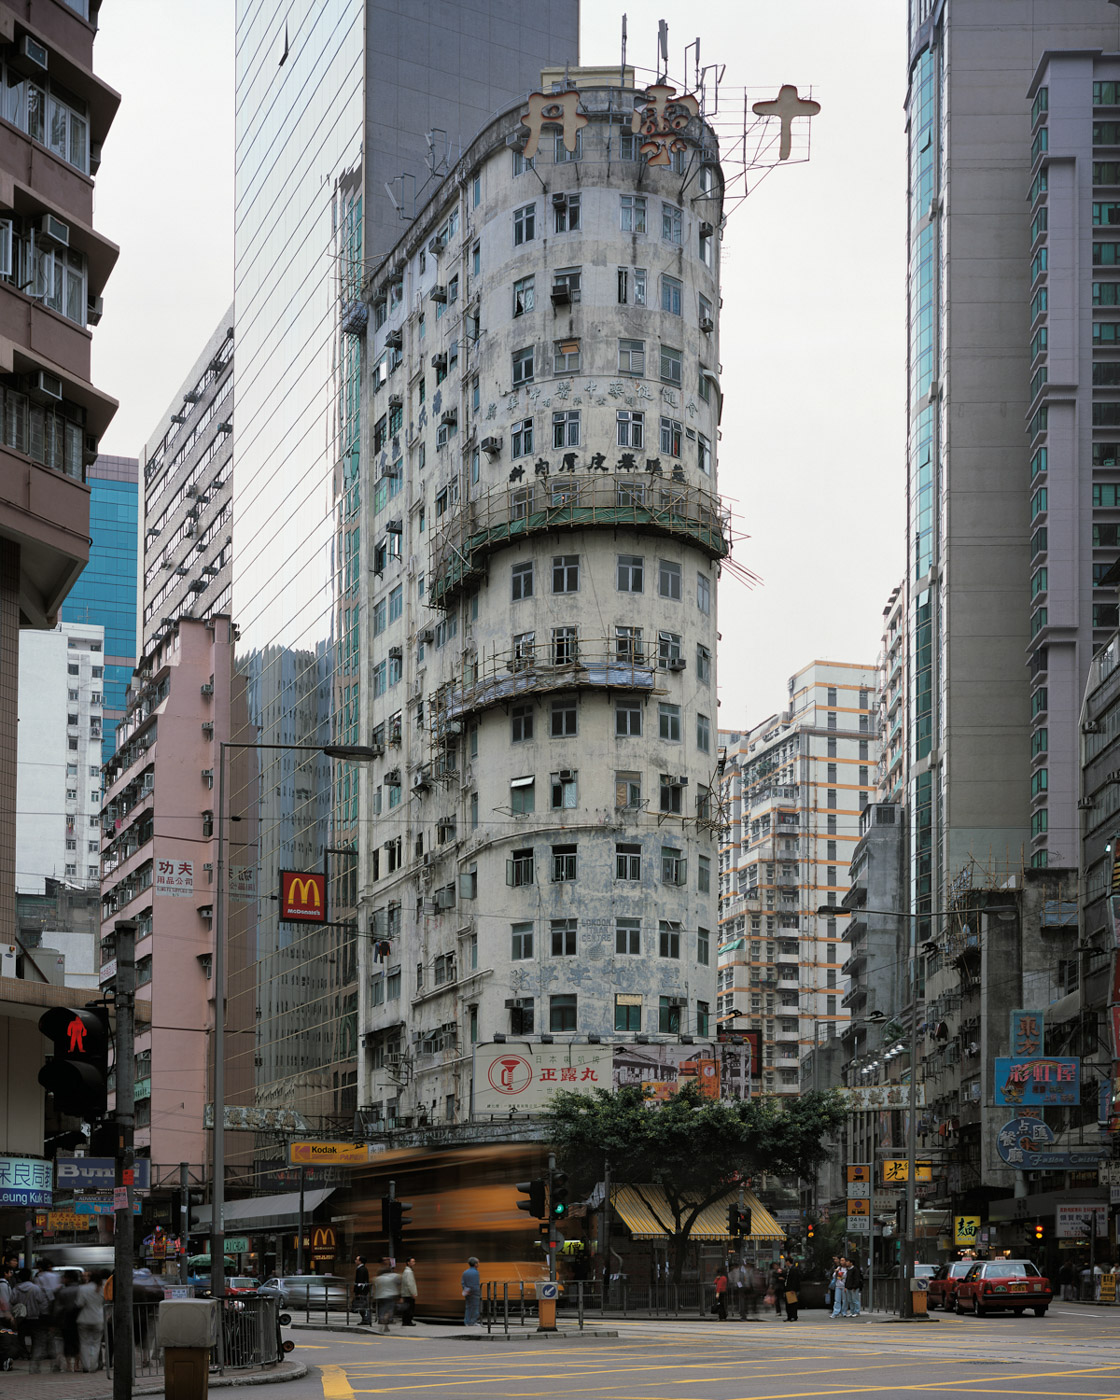 Michael Wolf, Corner Houses, Hong Kong, #32